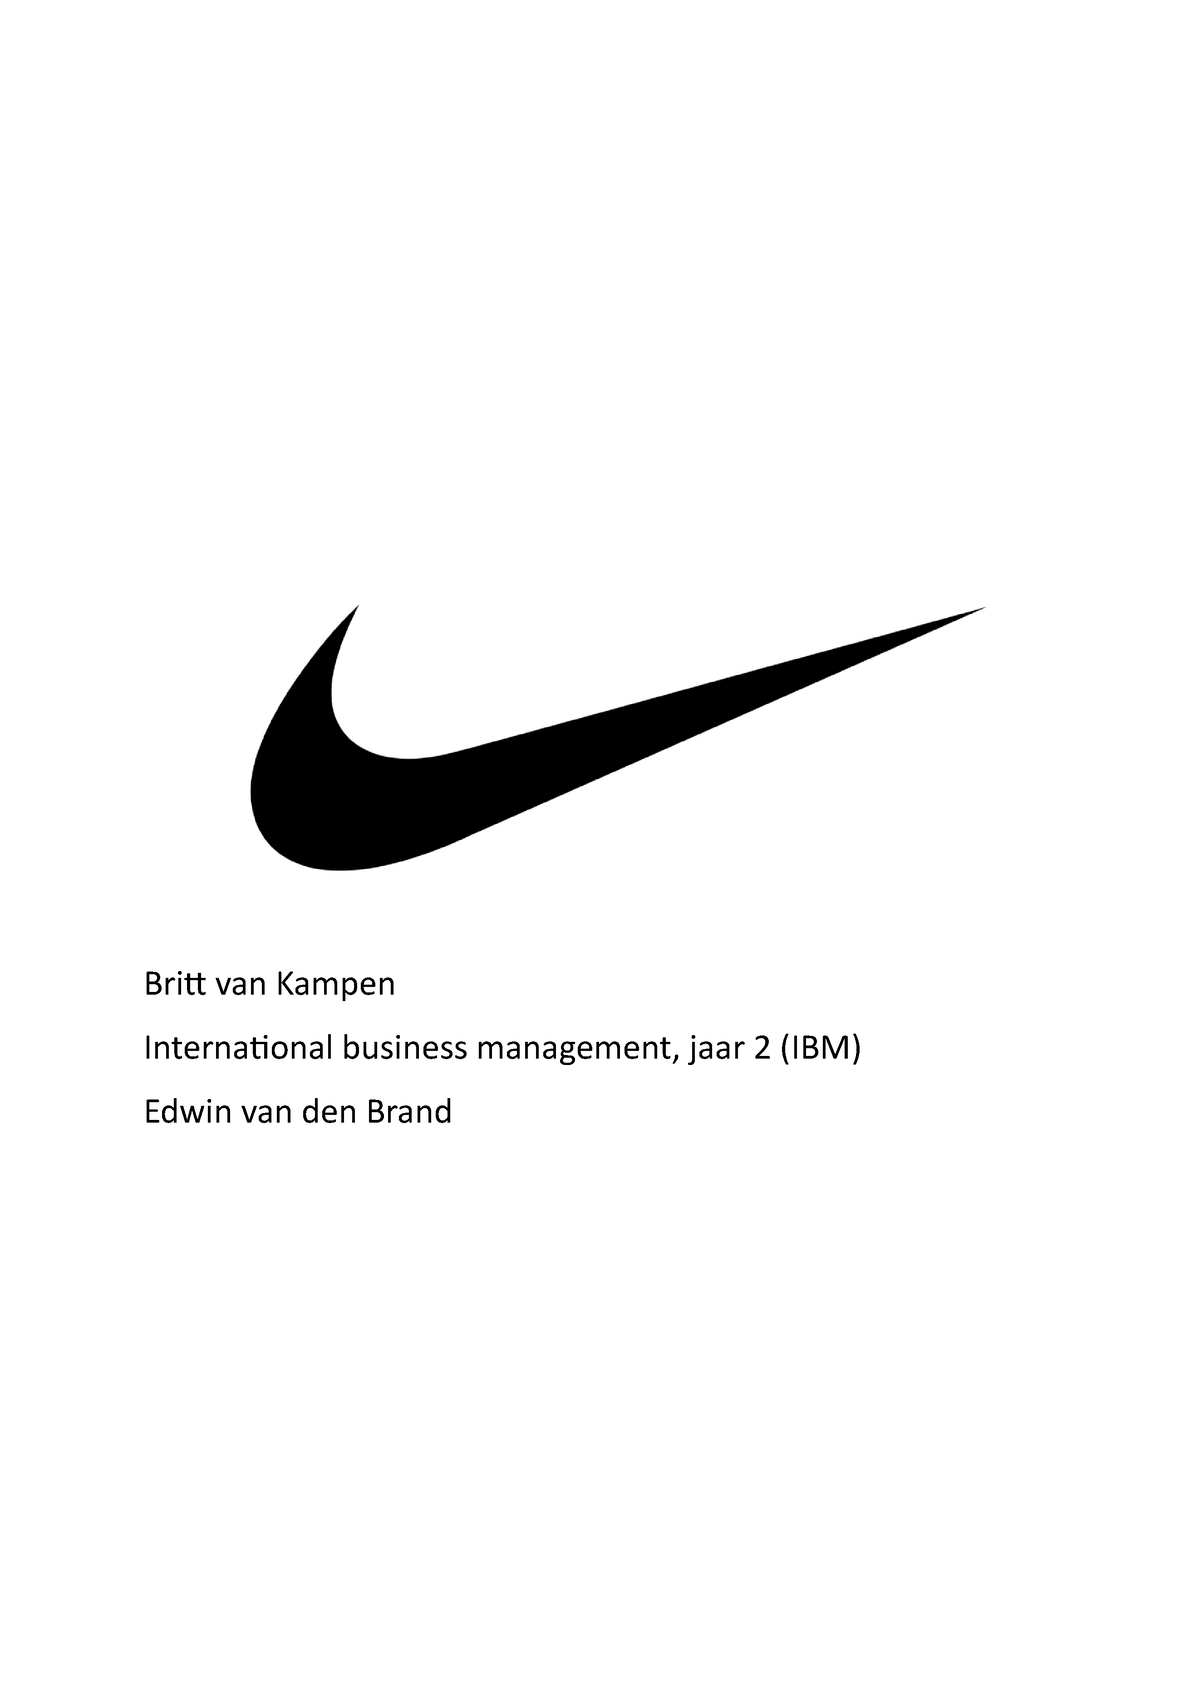 M.V.O. Nike - Britt van Kampen International business jaar 2 (IBM) Edwin van den Brand -